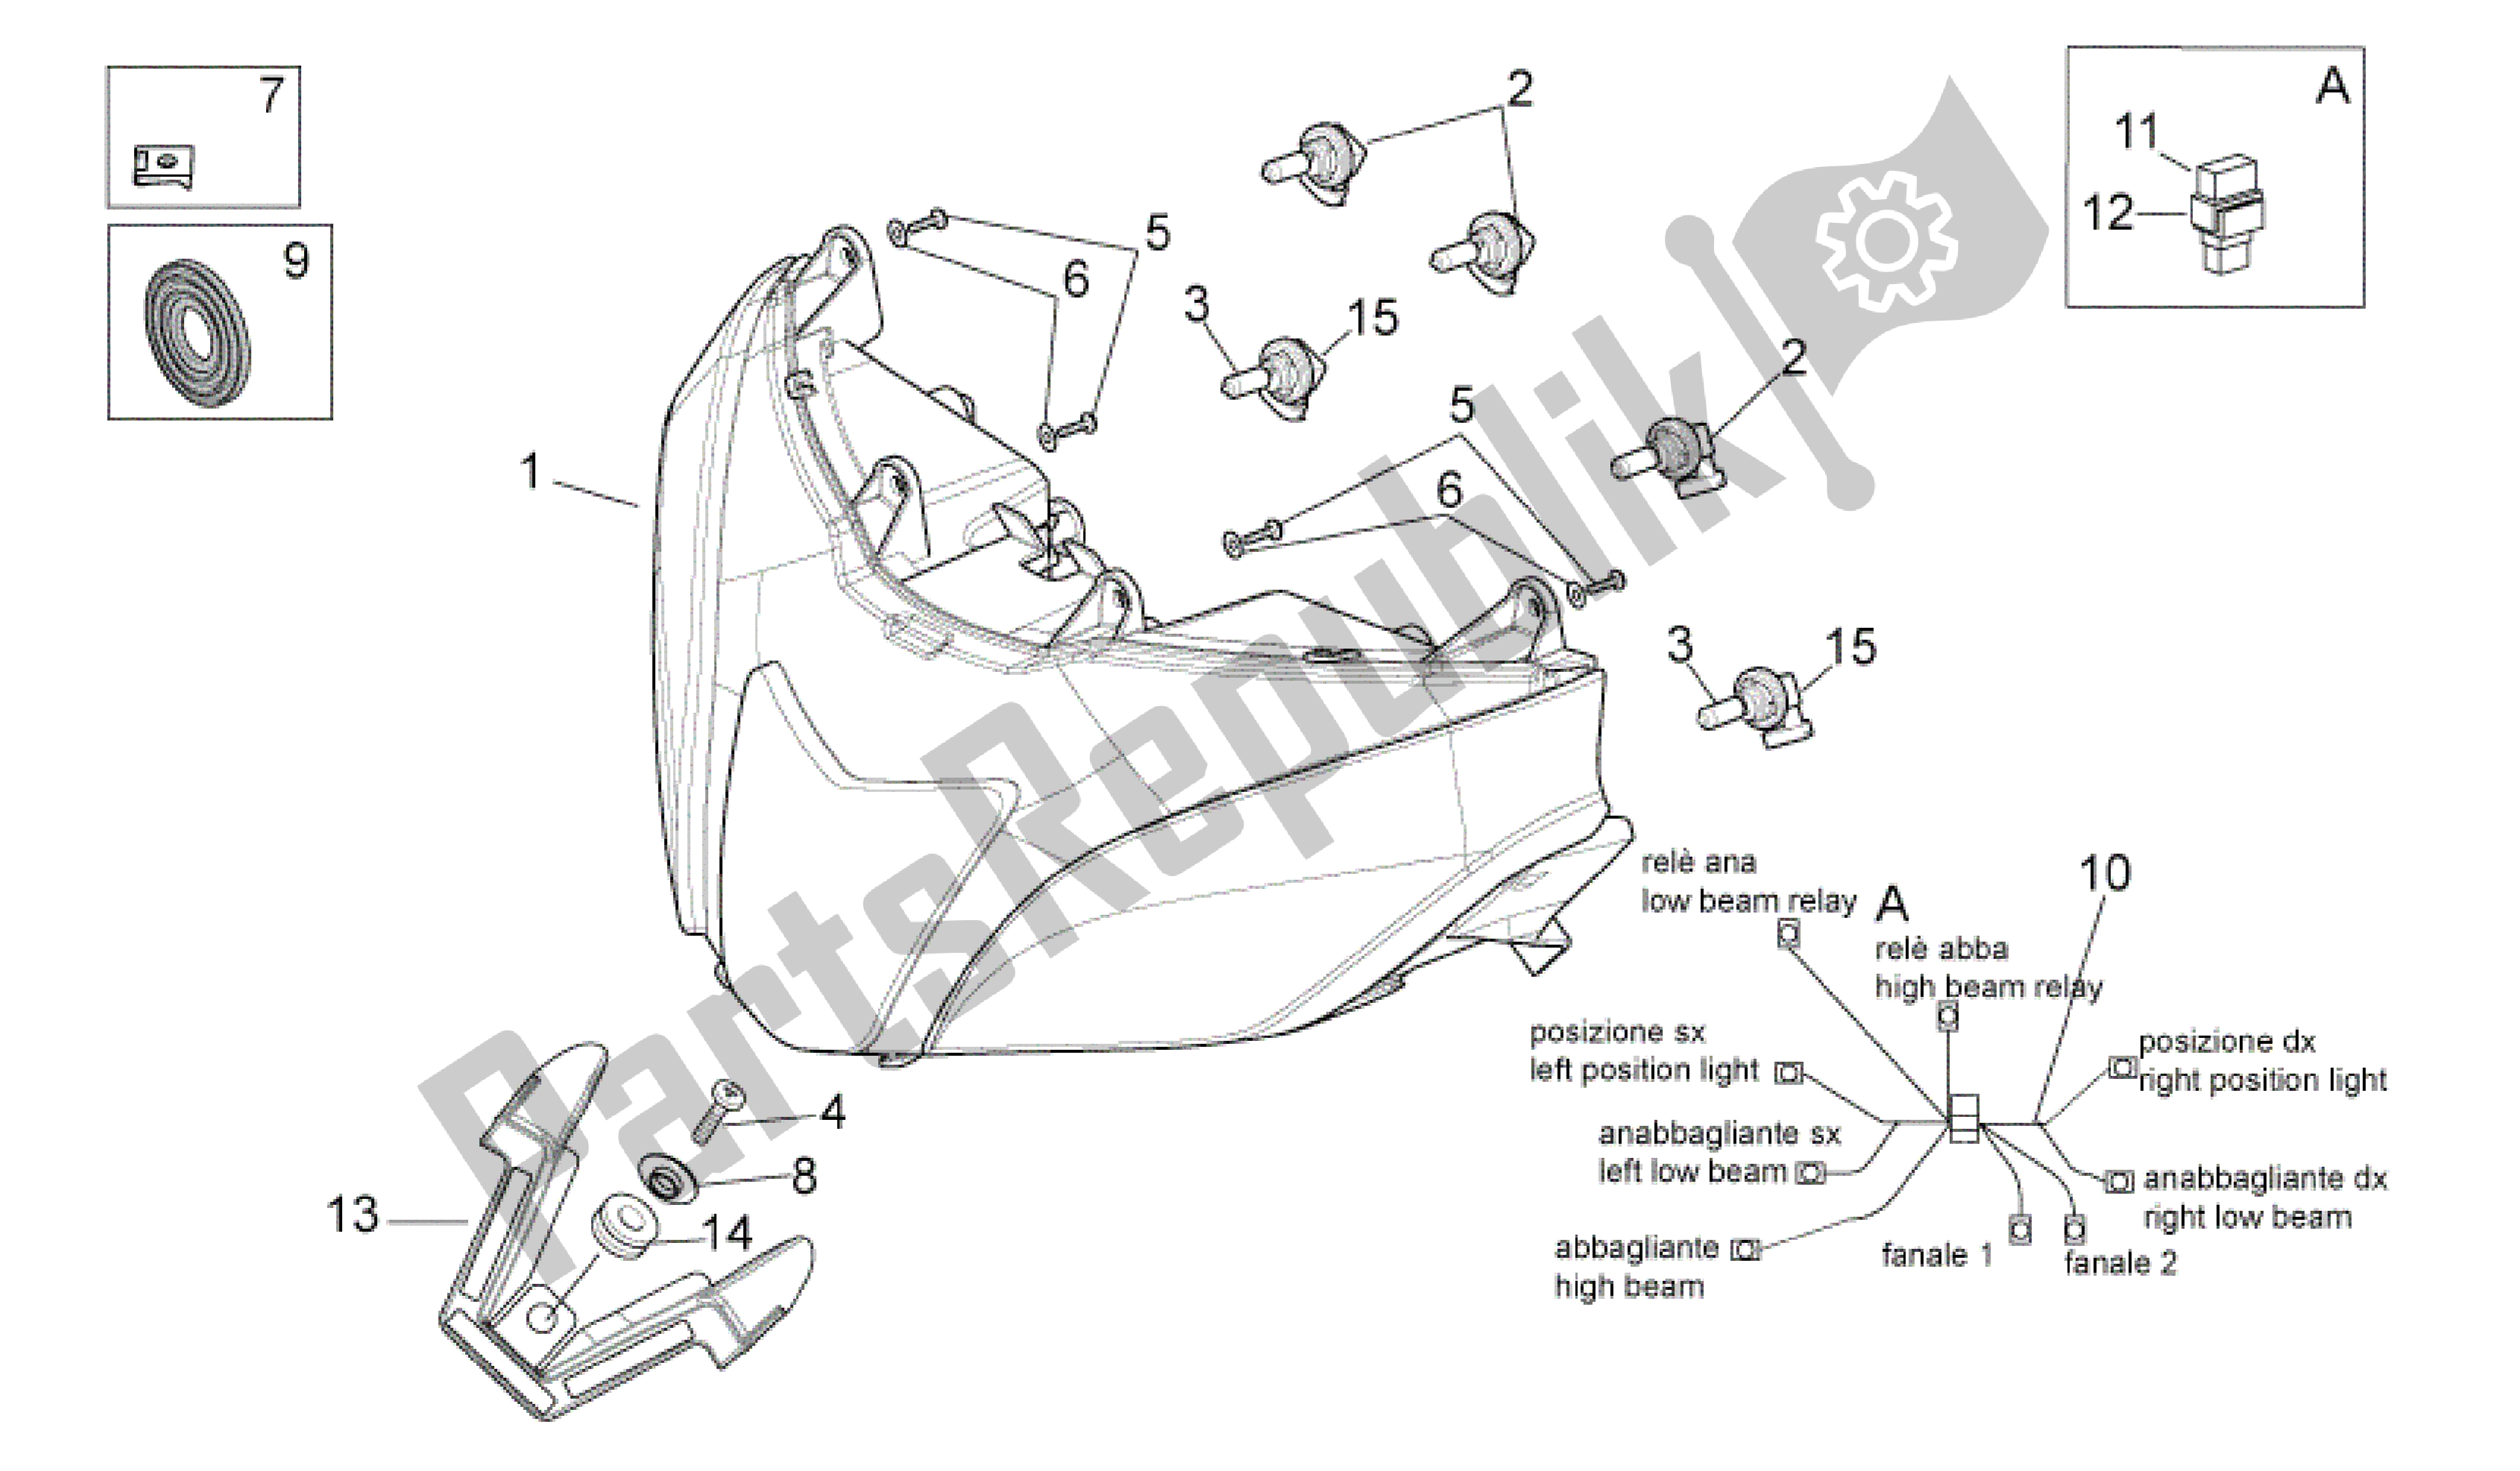 All parts for the Headlight of the Aprilia RSV4 Aprc R 3982 1000 2011 - 2012